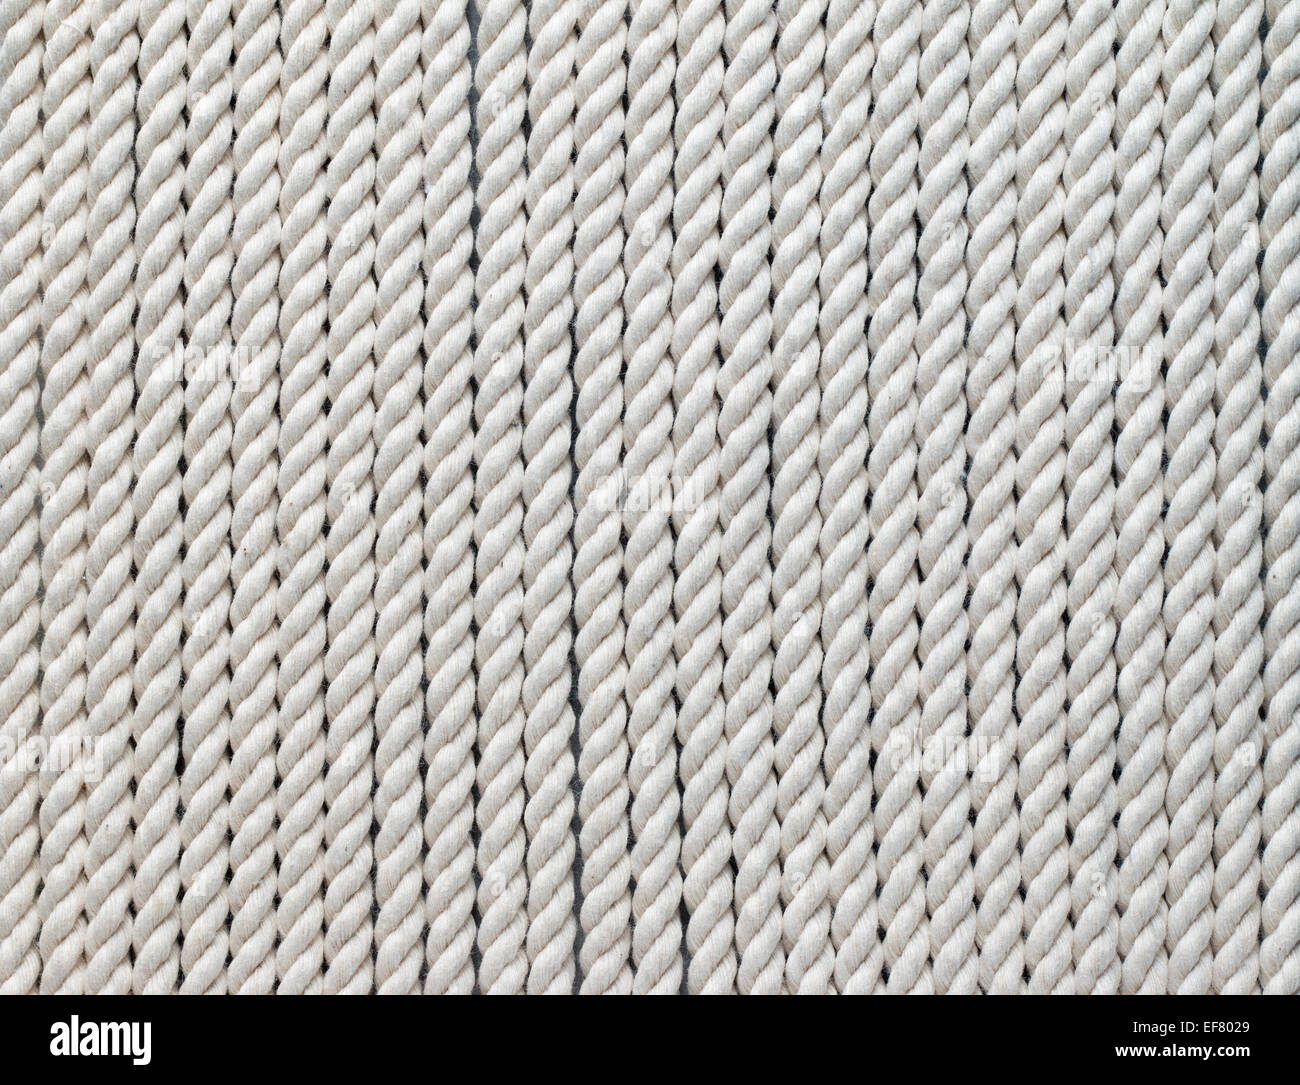 Baumwoll-Garn - Seil Textur Stockfoto